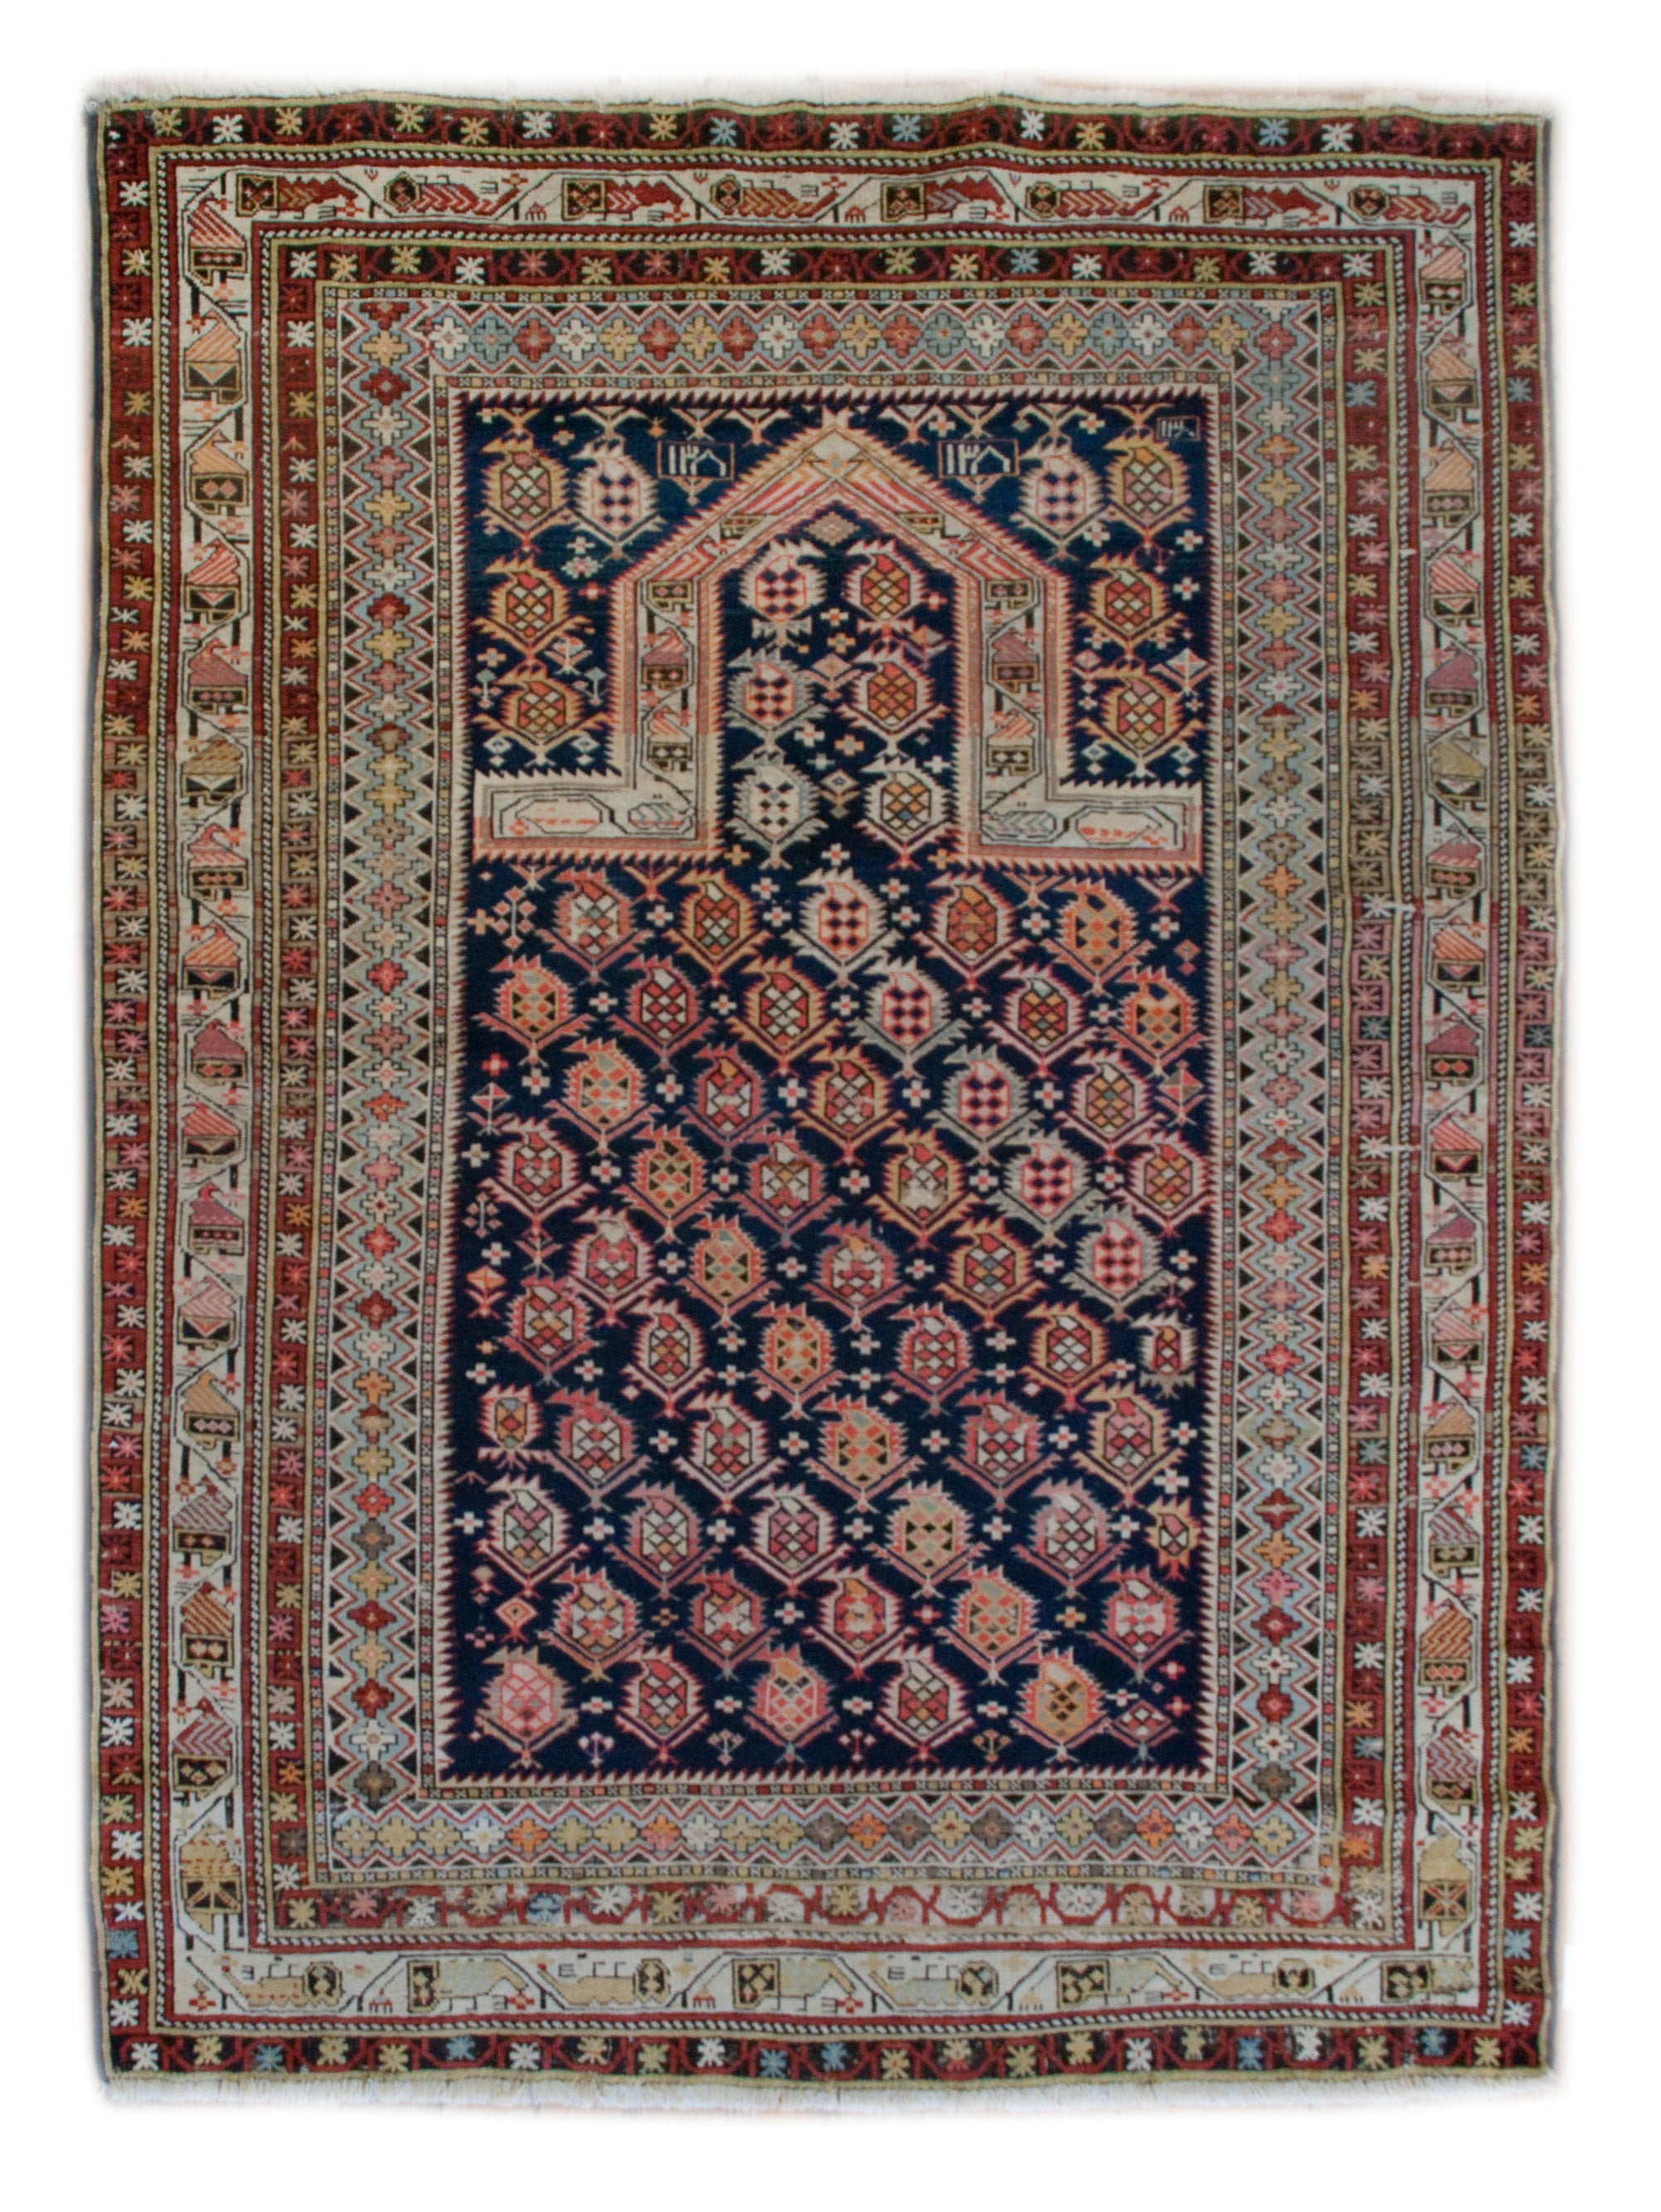 Late 19th Century Shirvan Prayer Rug